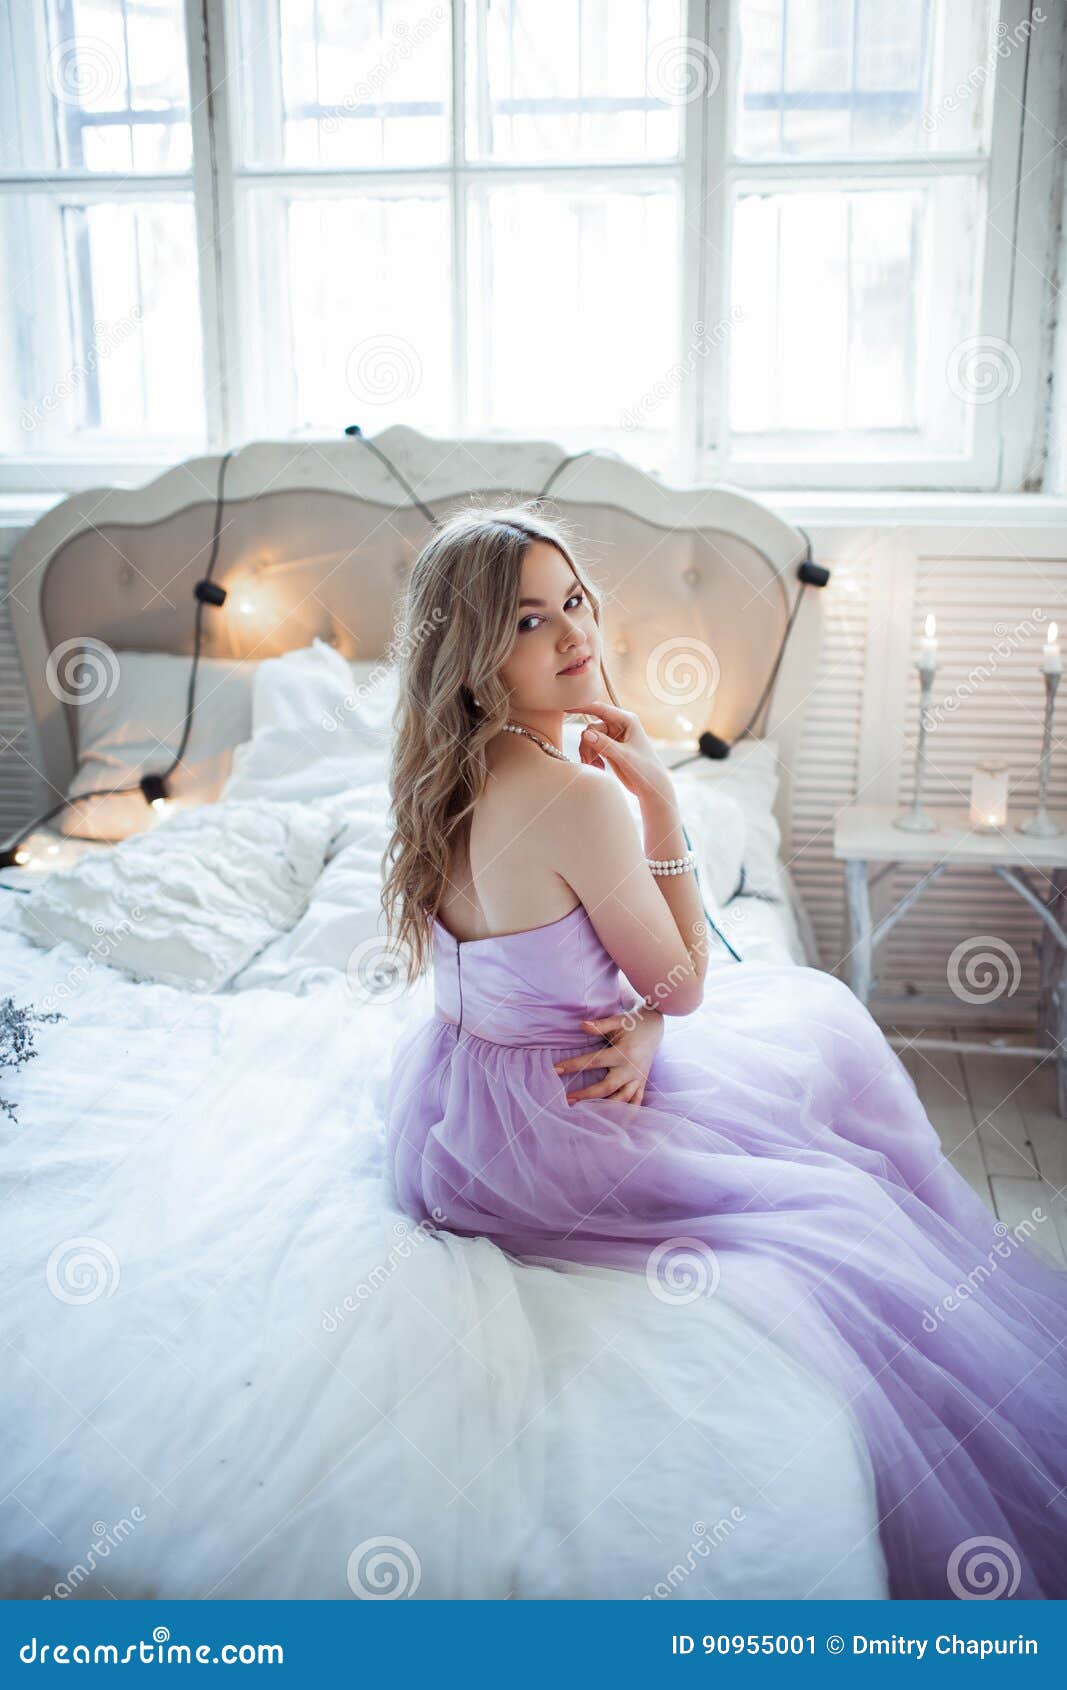 Very Beautiful Bride In A Delicate Purple Dress Sitting On